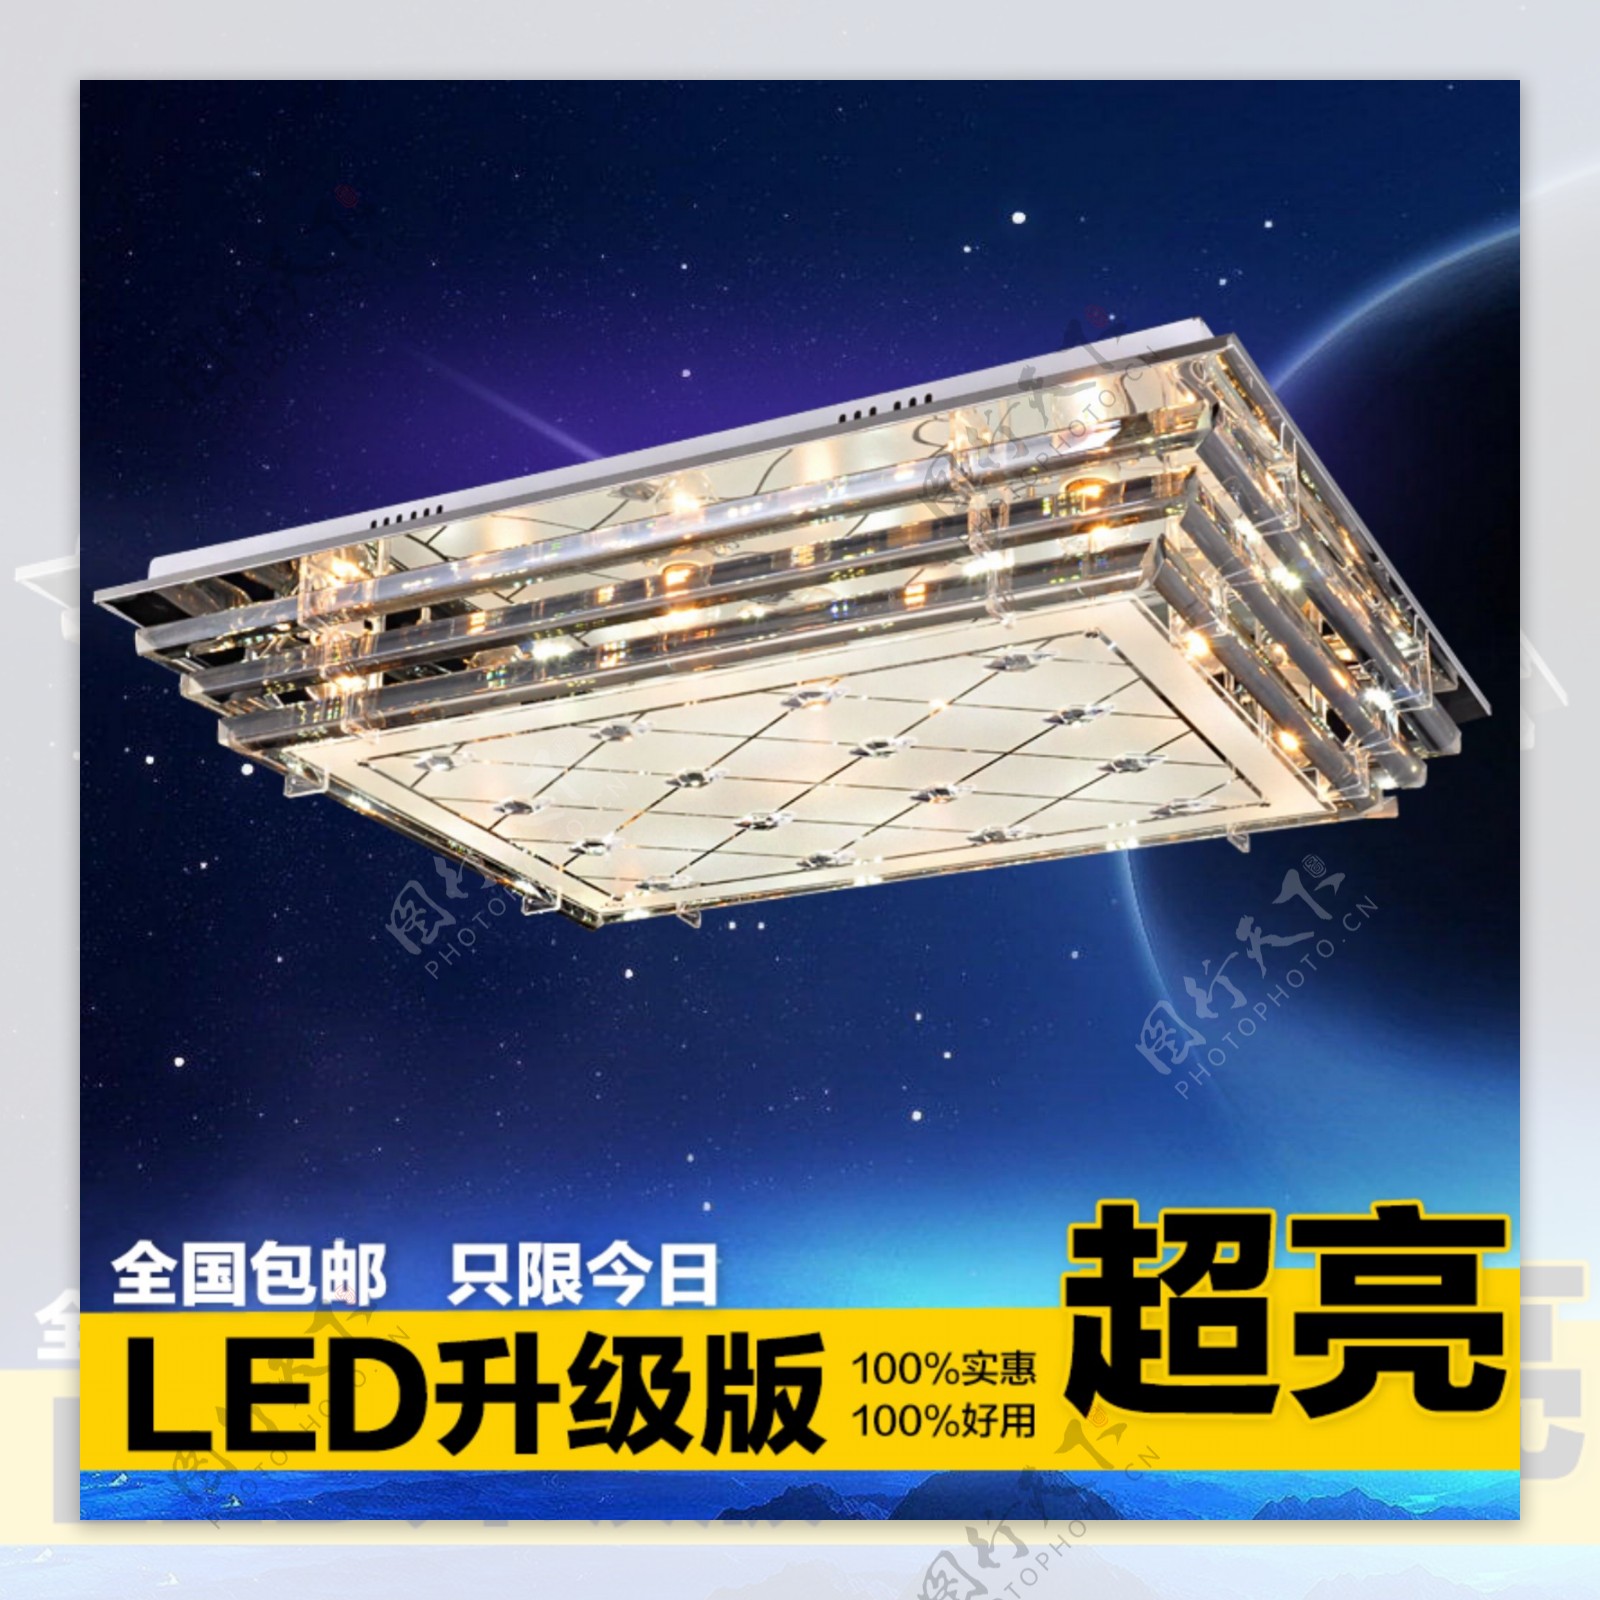 LED水晶灯升级版创意主图